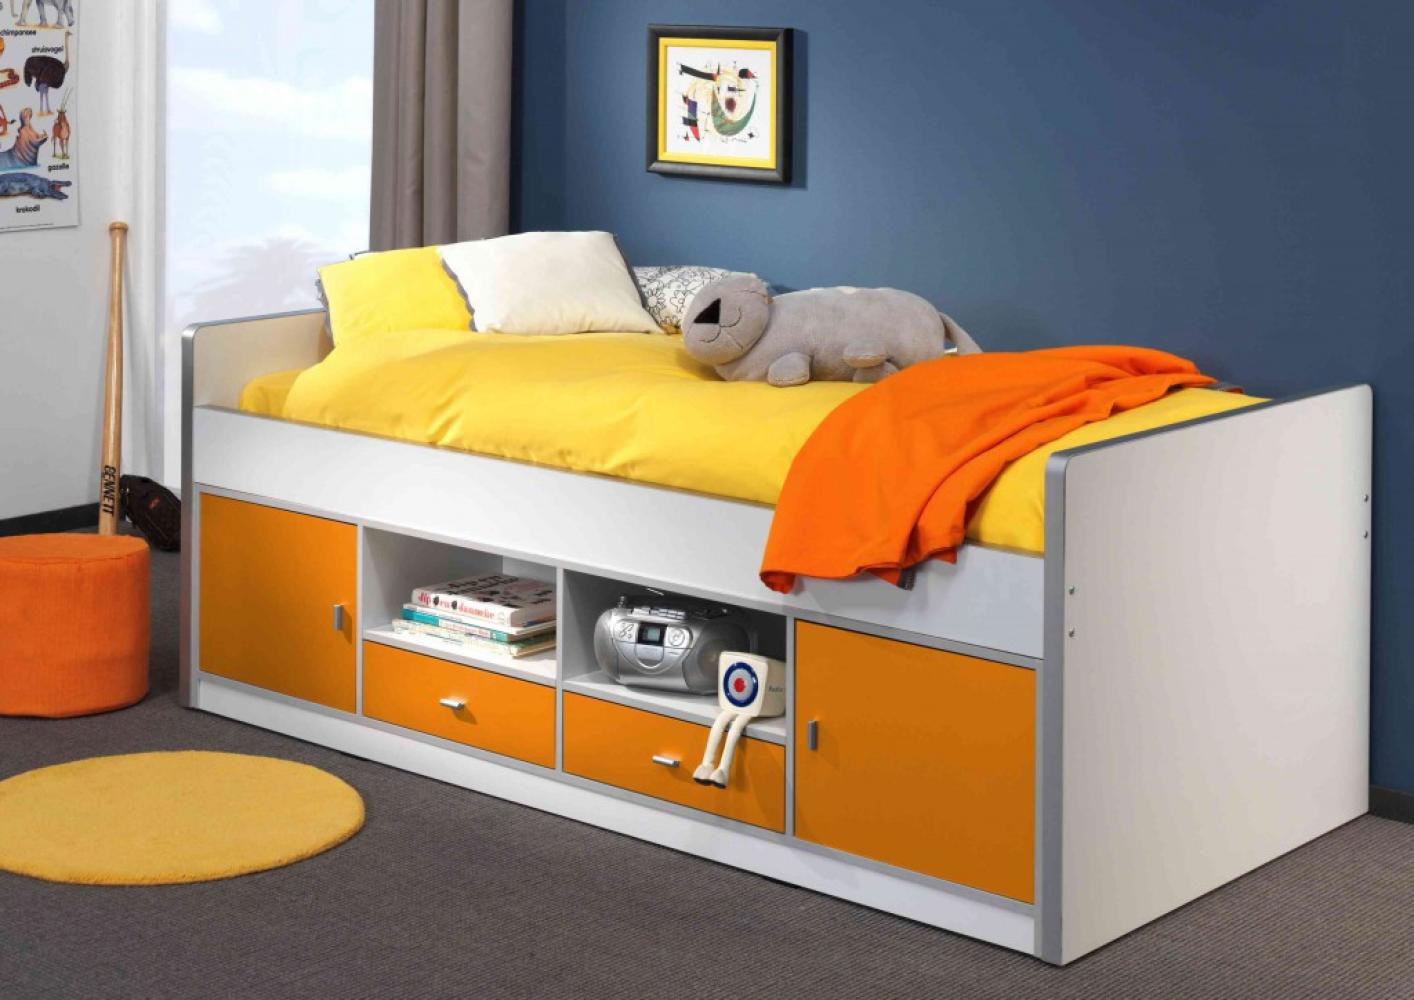 Bonny Kojenbett Jugendbett Bettgestell Kinderbett Bett 90 x 200 cm Weiß / Orange Soft, 13 Leisten Bild 1